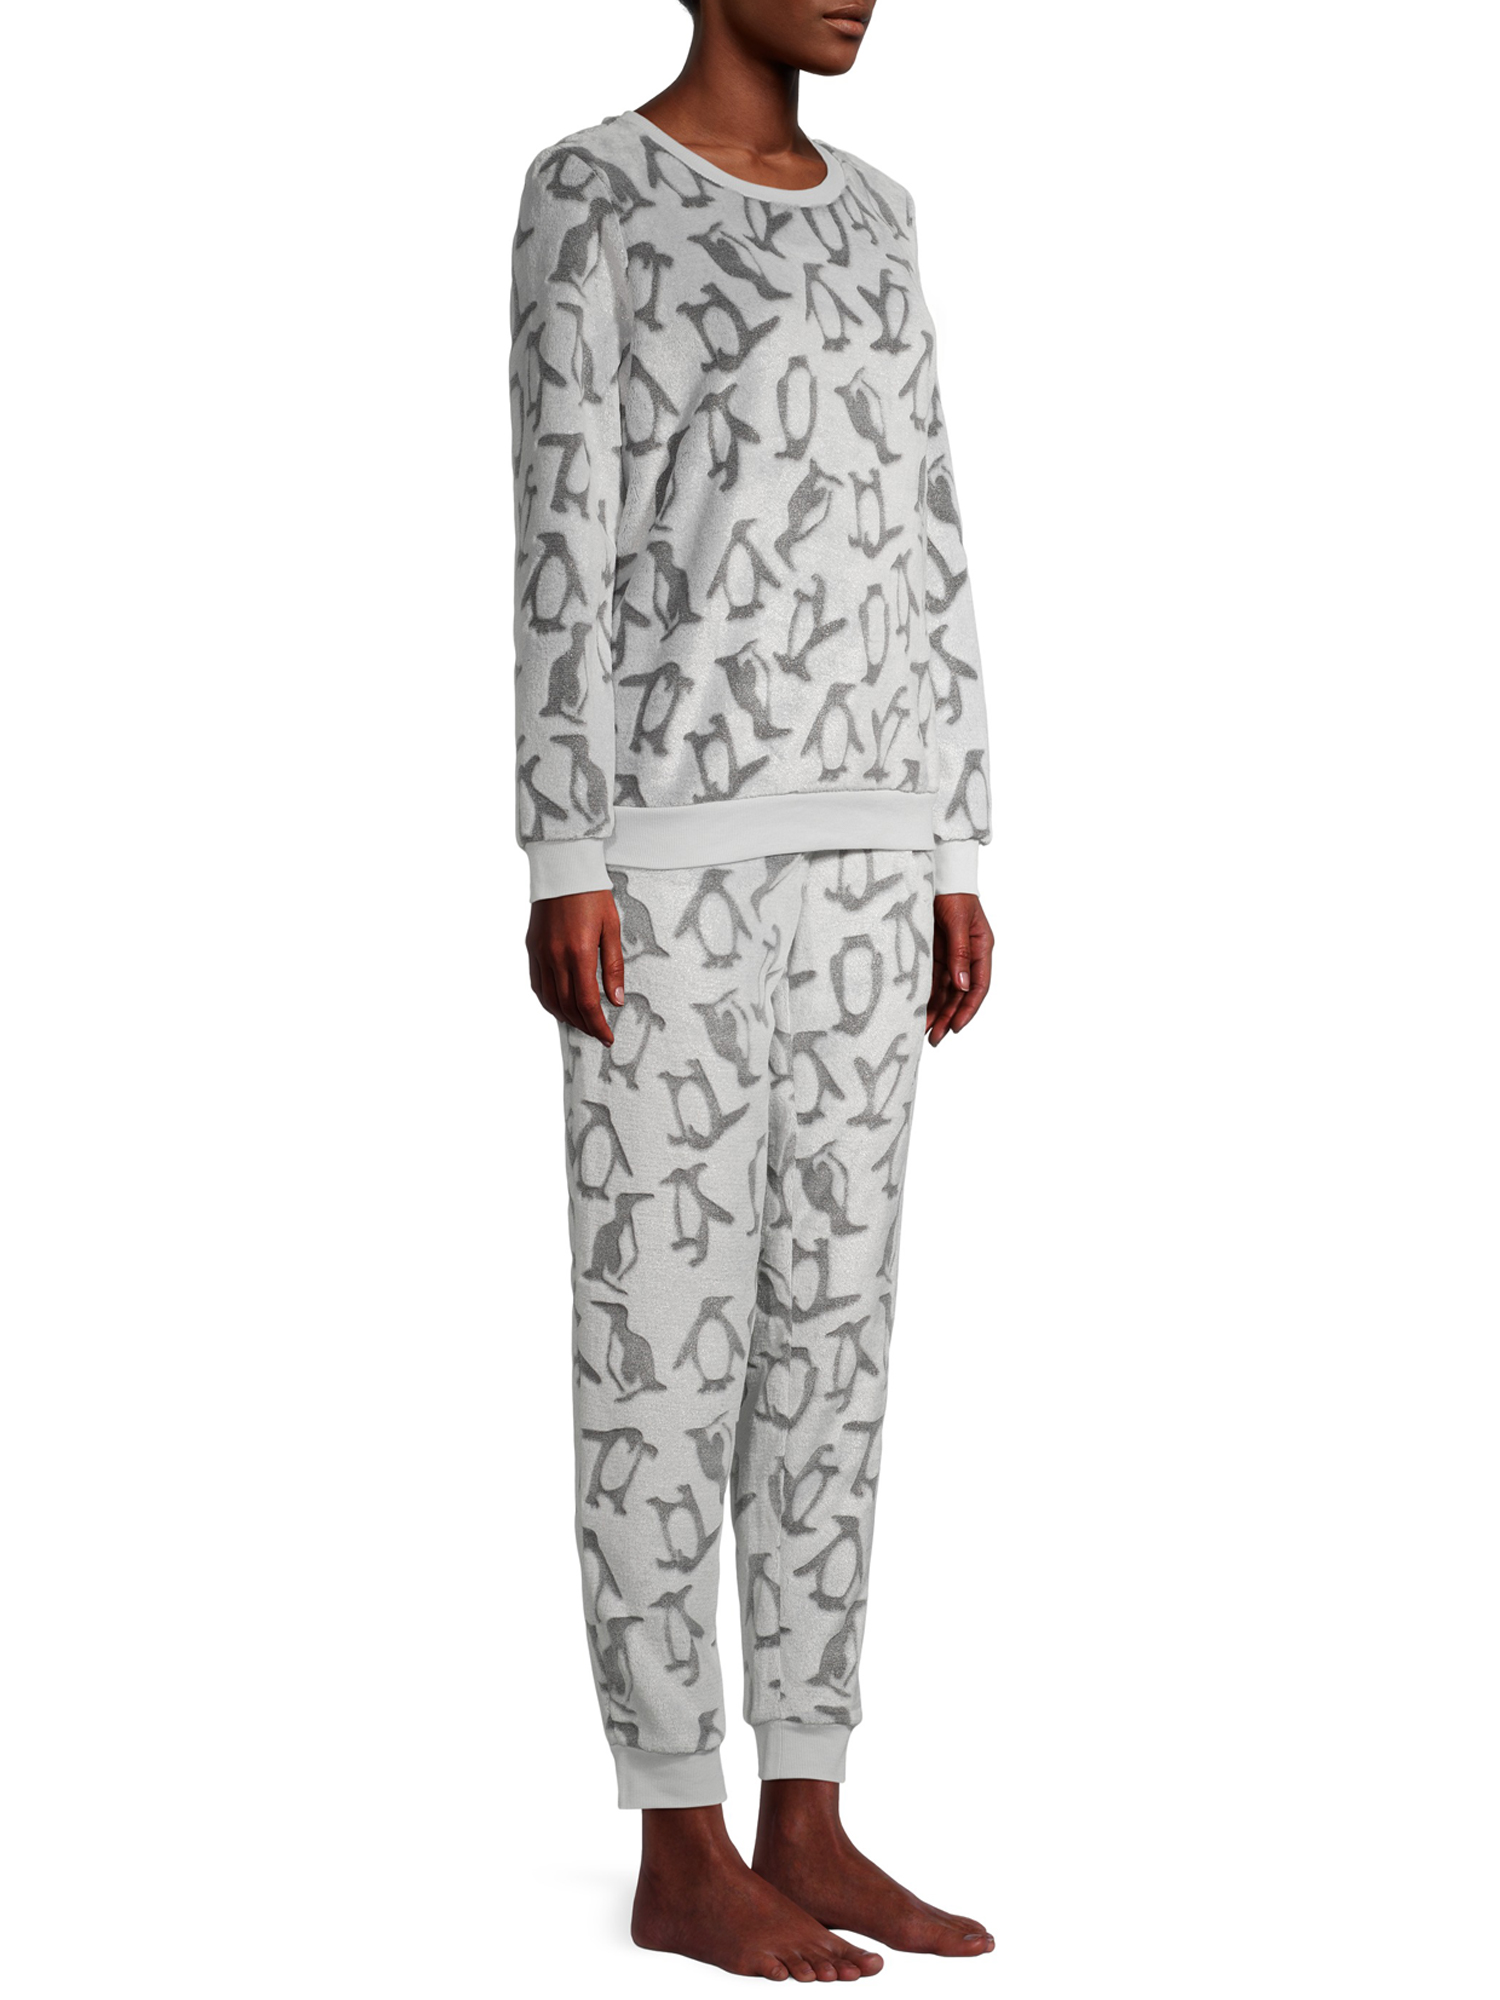 George Women's and Women's Plus 2-Piece Plush Pajama Set - image 4 of 6